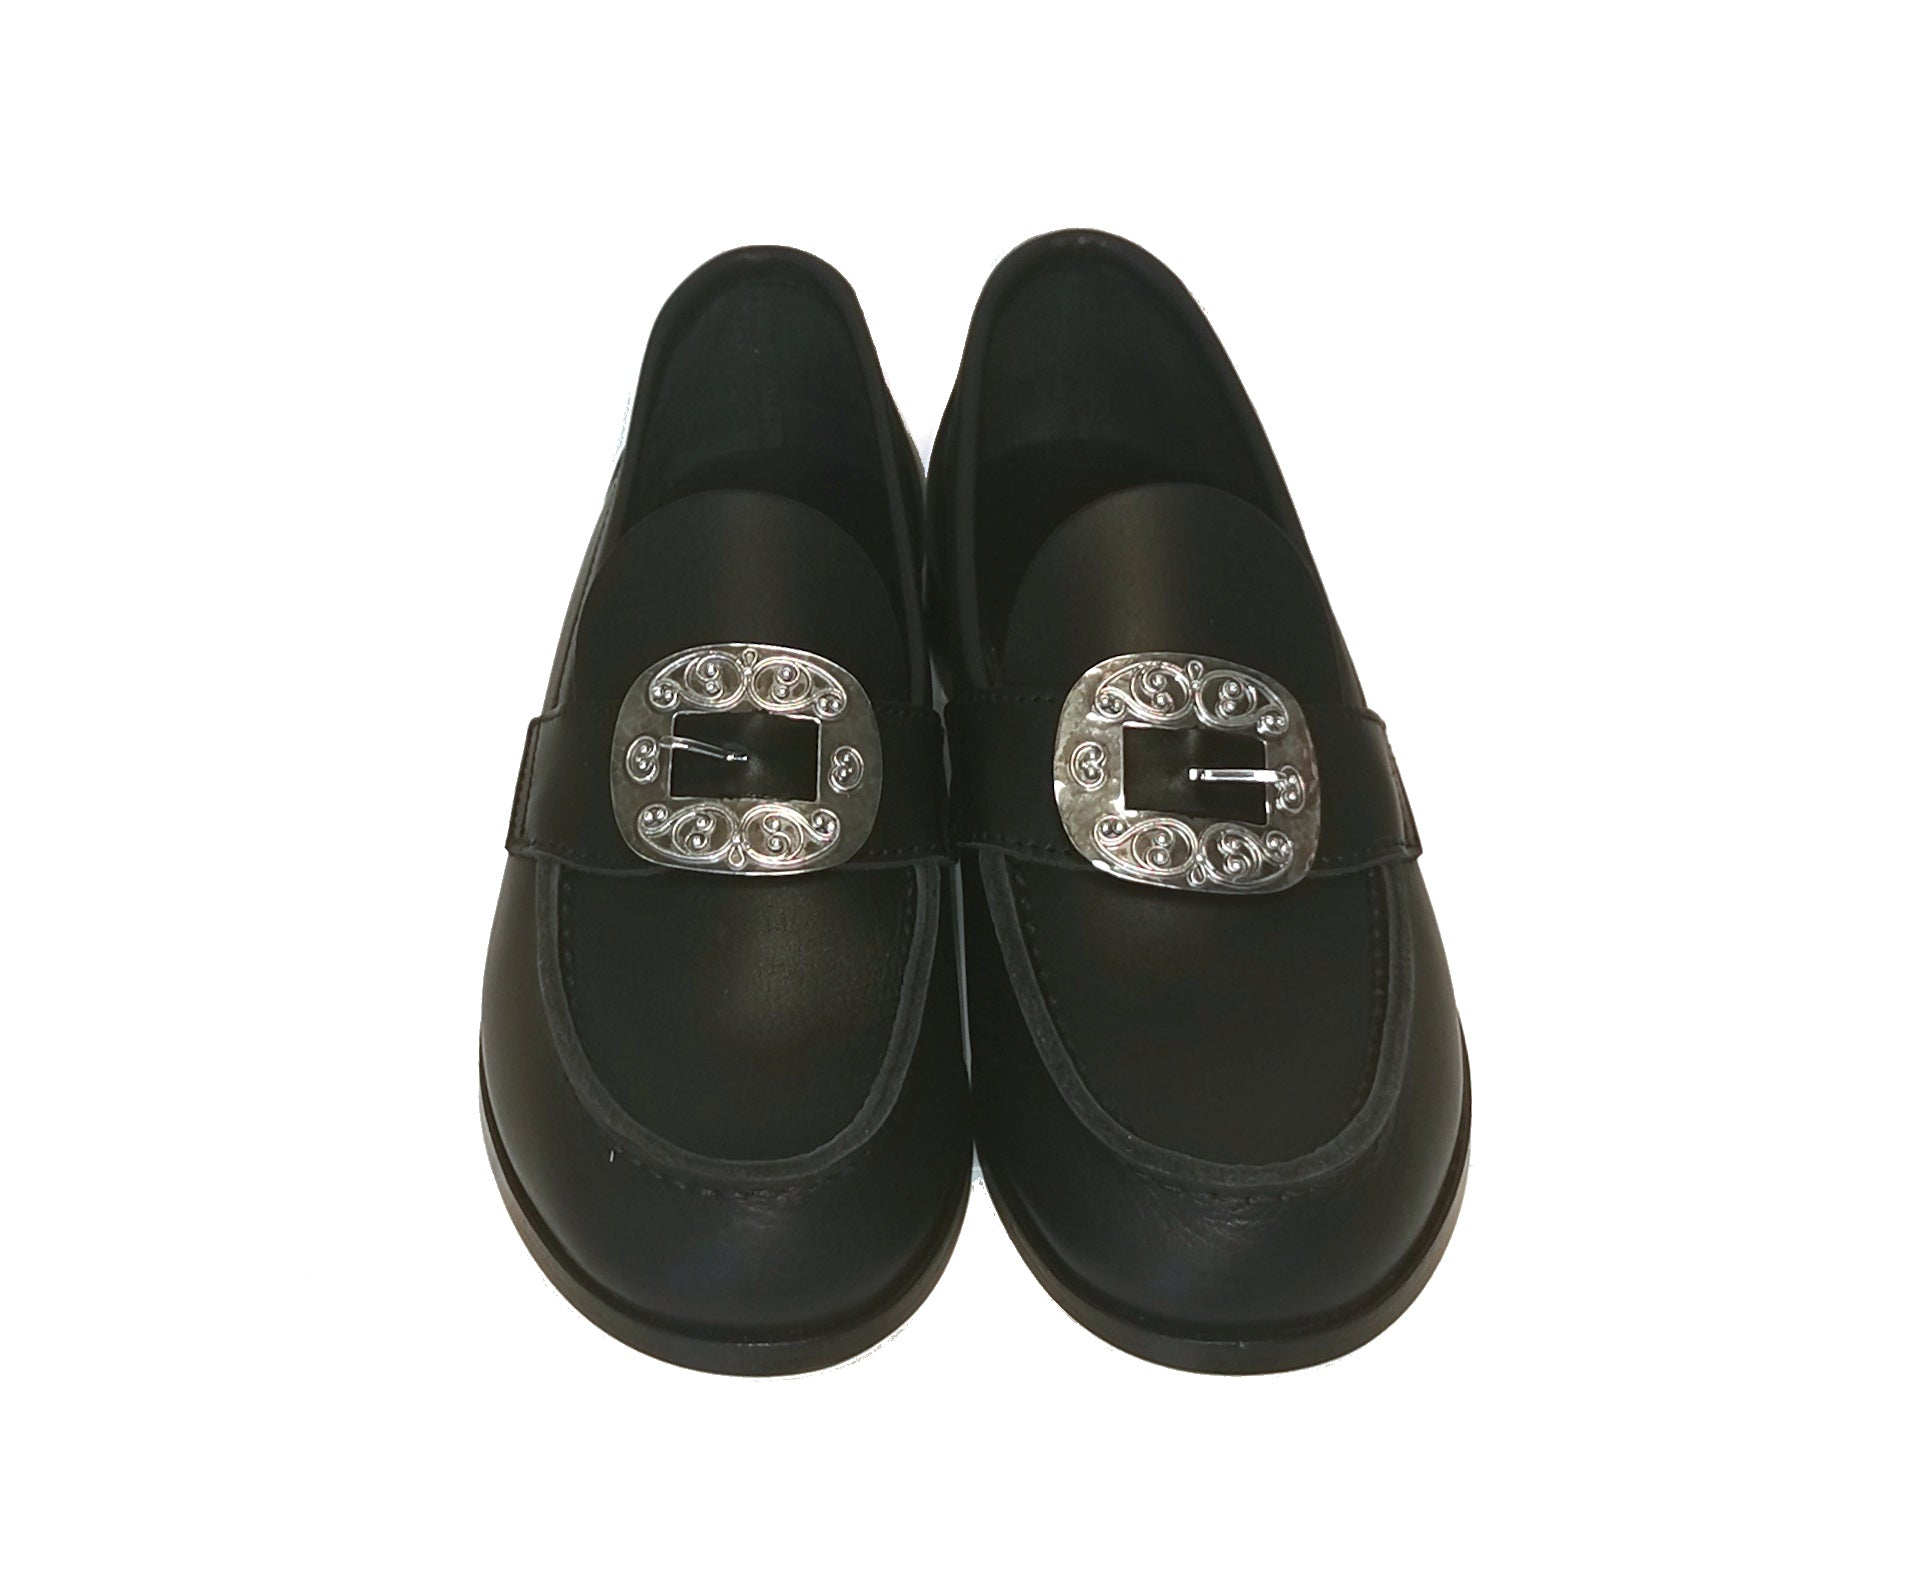 Bunad shoes with shoe buckle of oxidized silver - Model Wangen